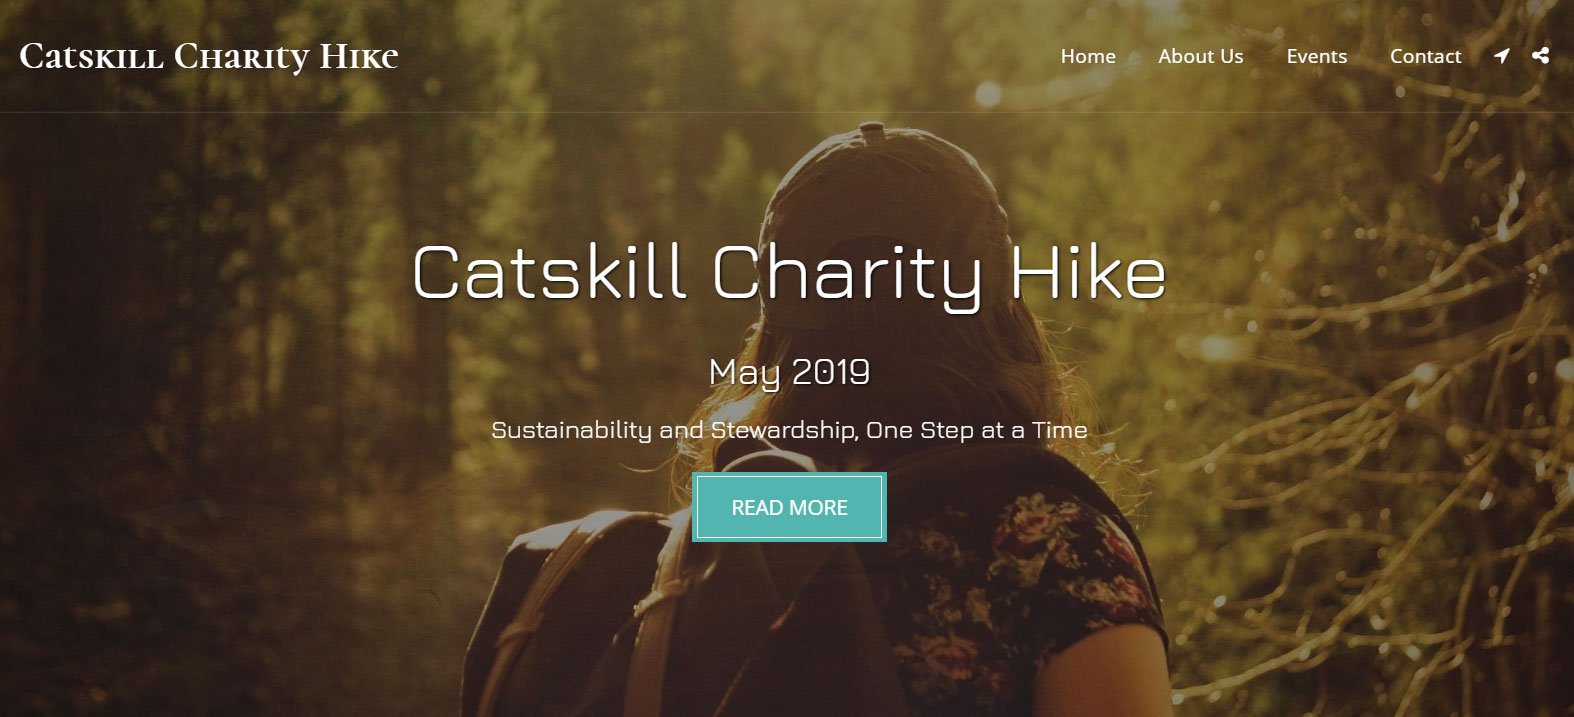 Catskill Charity Hike